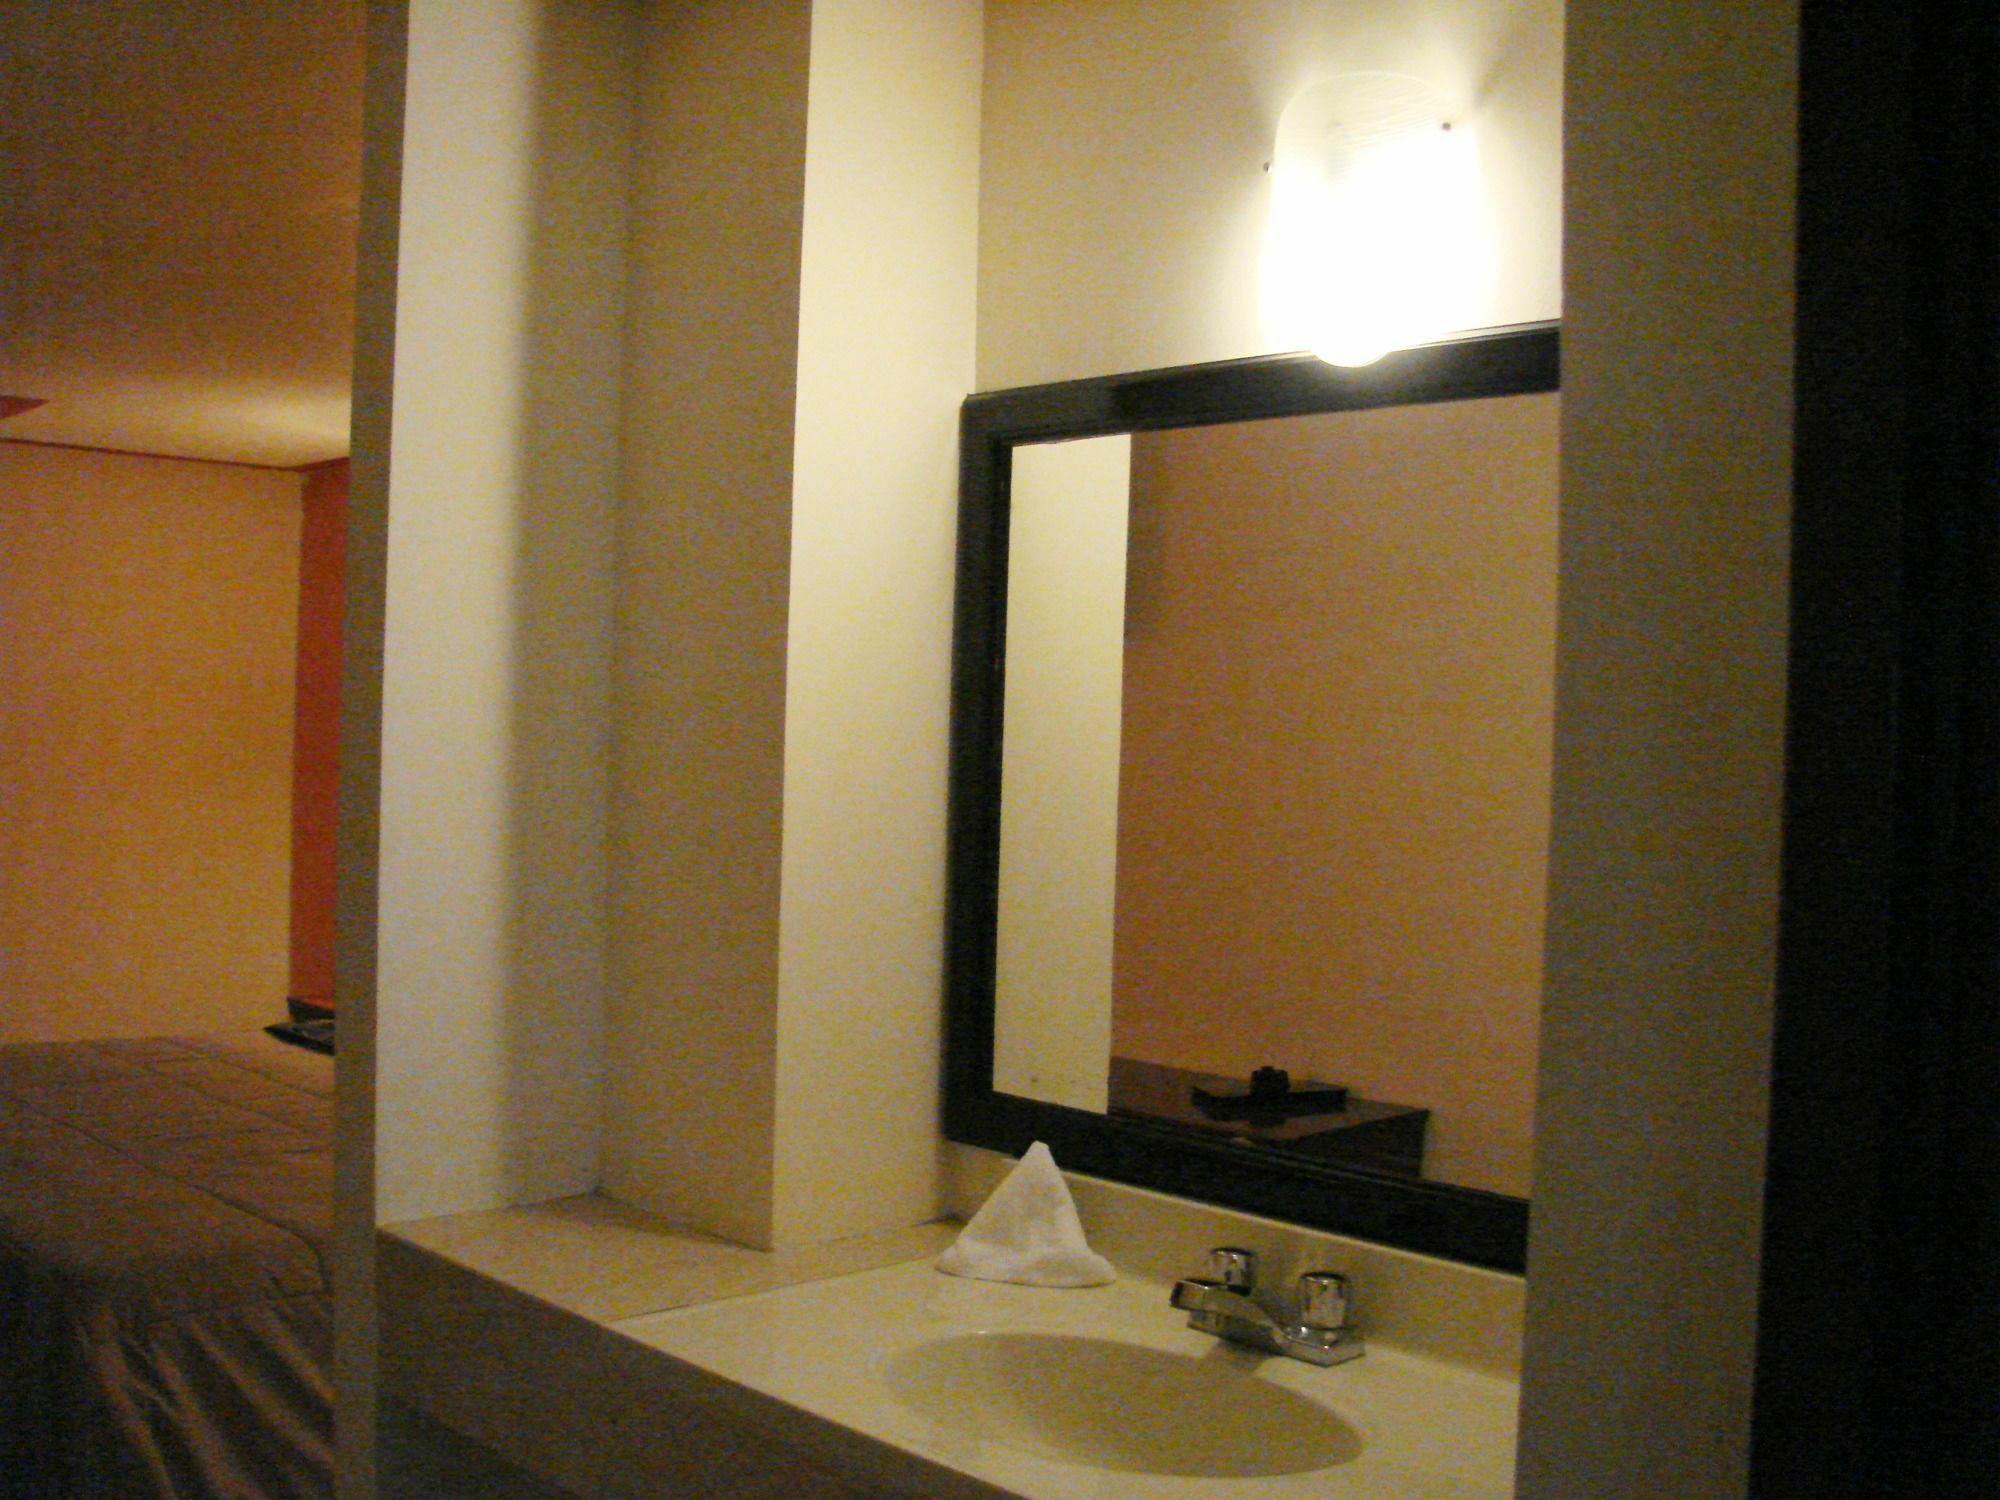 Hotel Inn Plaza Del Angel Chihuahua Exterior foto